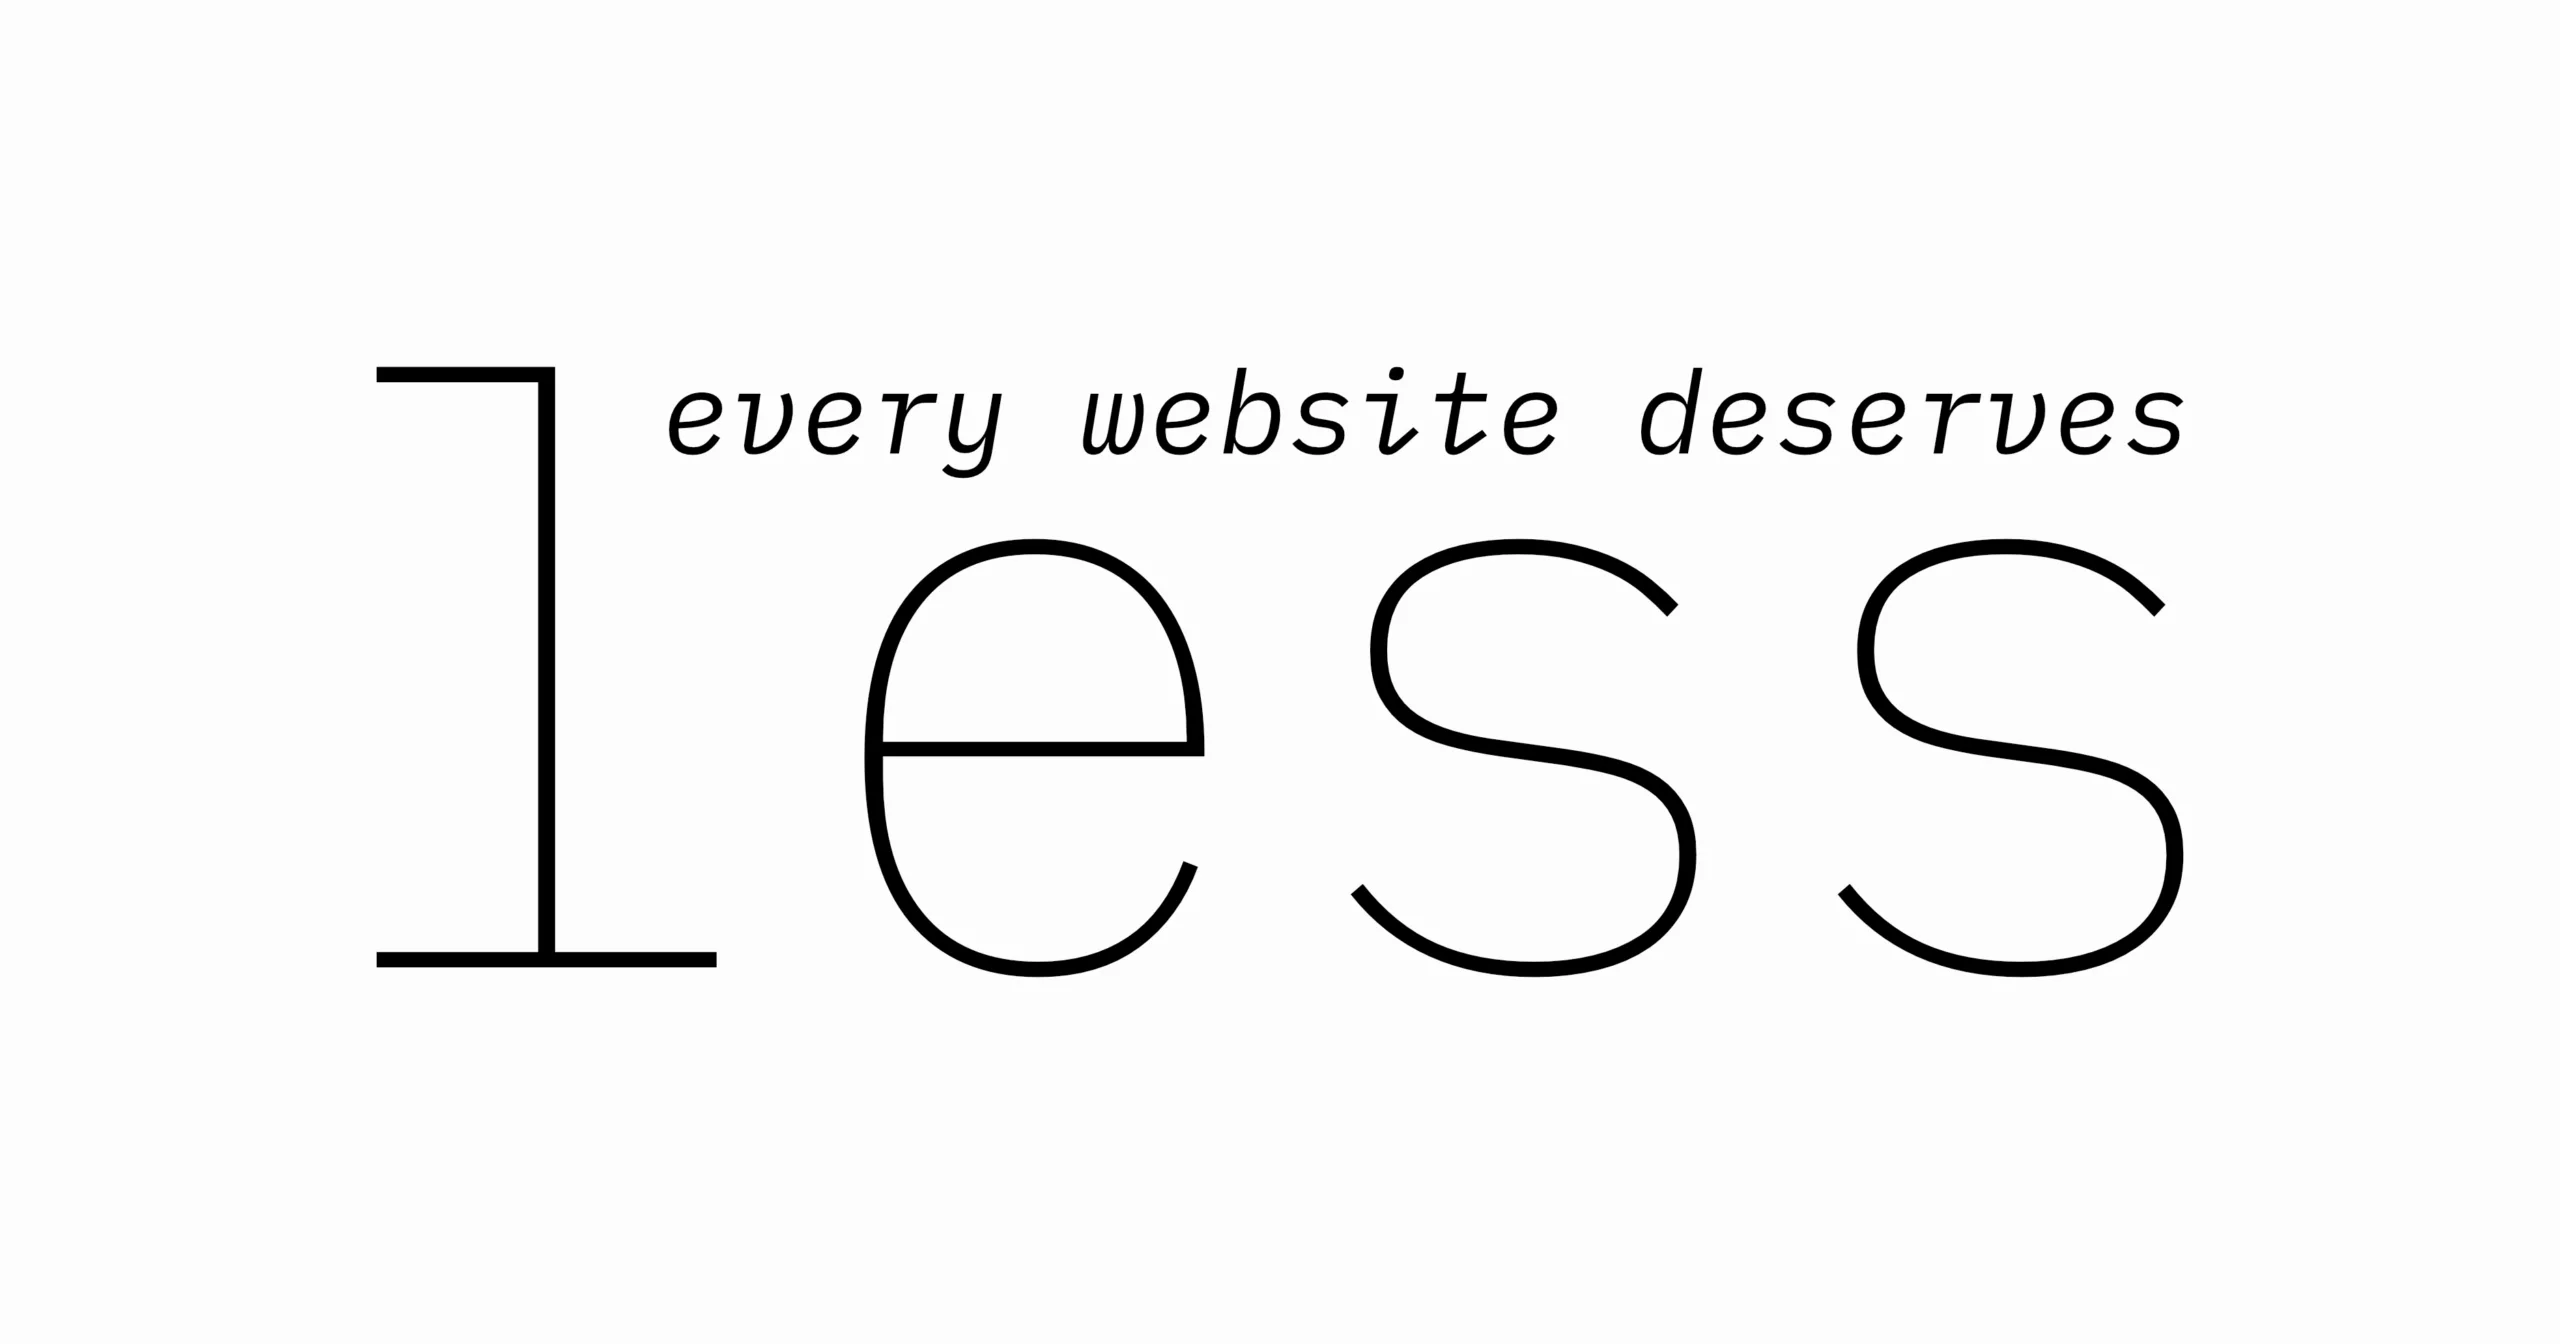 Every website deserves Less.